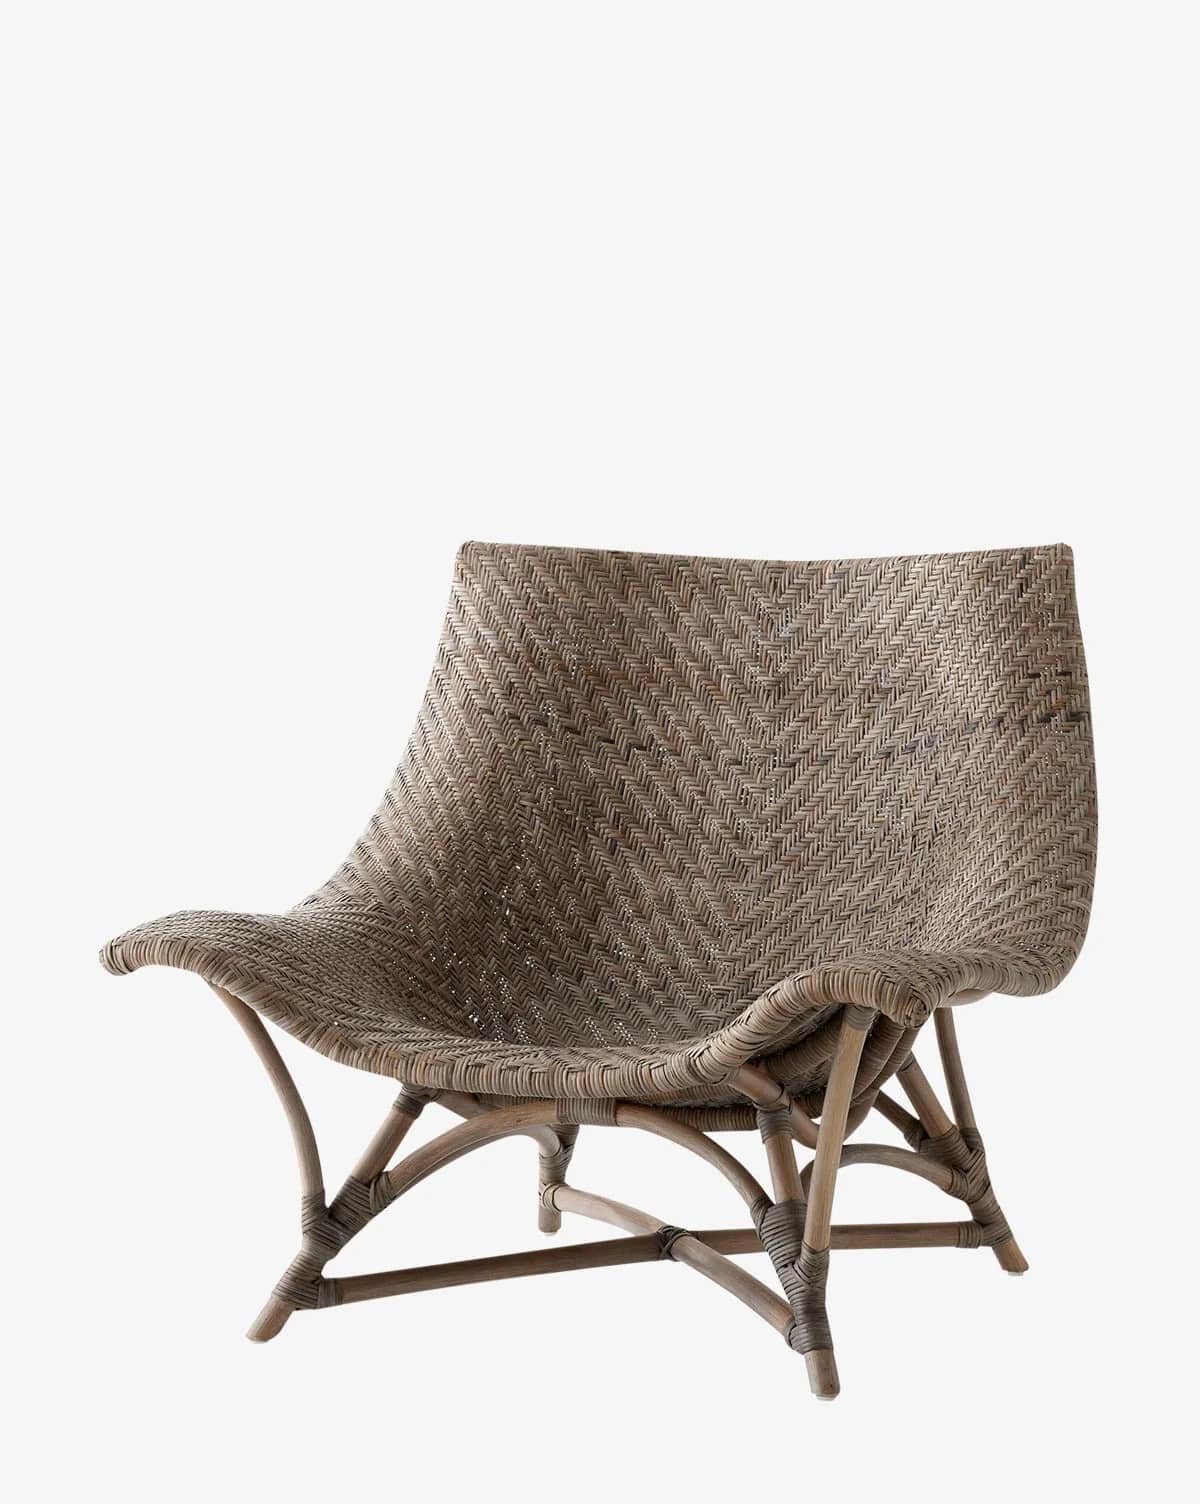 McGee & Co. Kilani Lounge Chair
